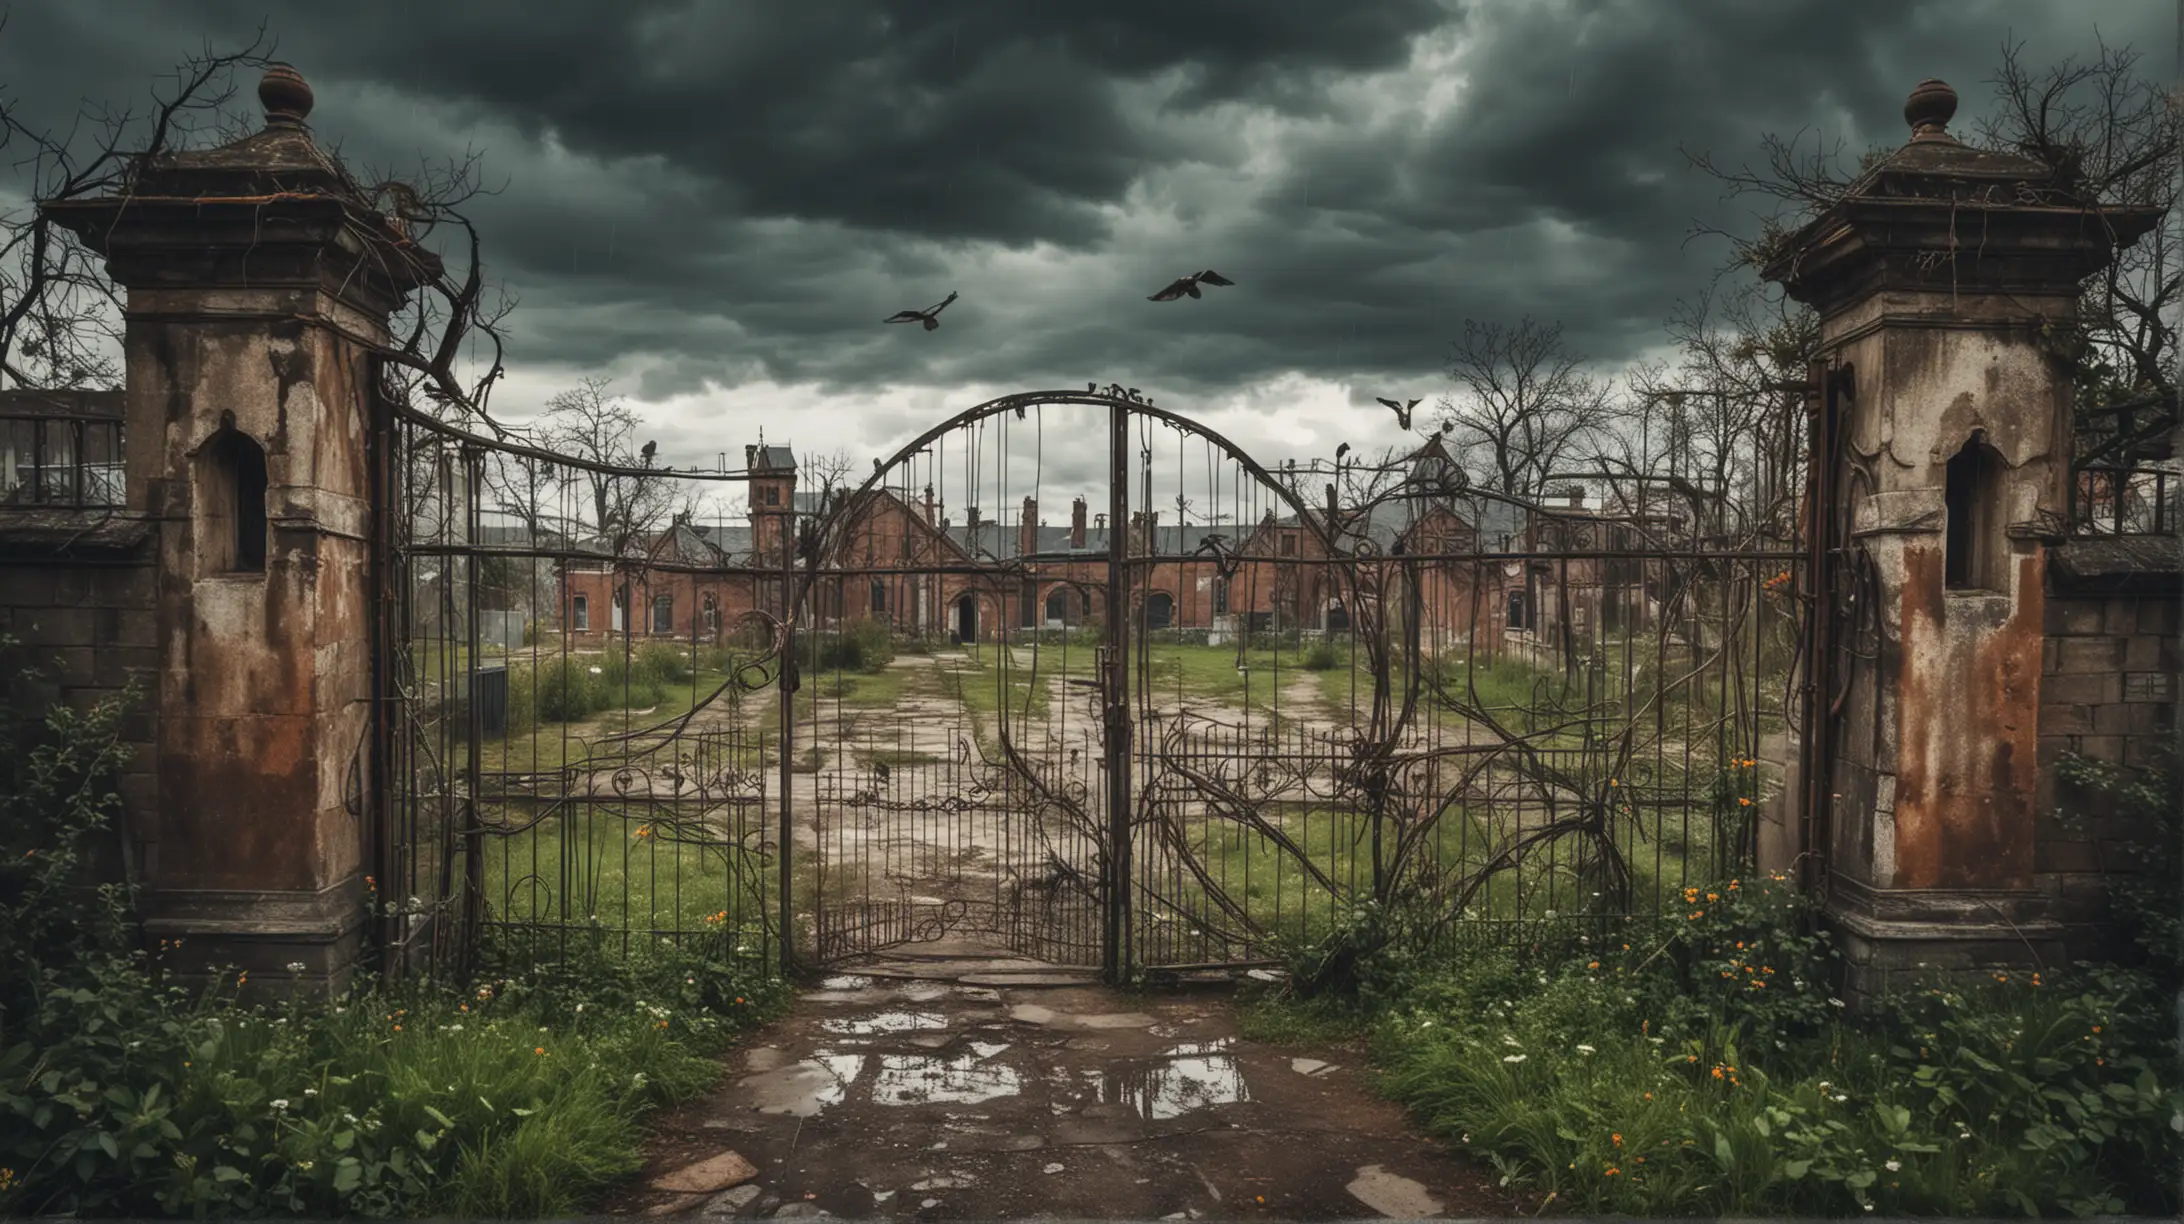 Desolate Steampunk Lunatic Asylum with Neglected Garden and Cloudy Sky